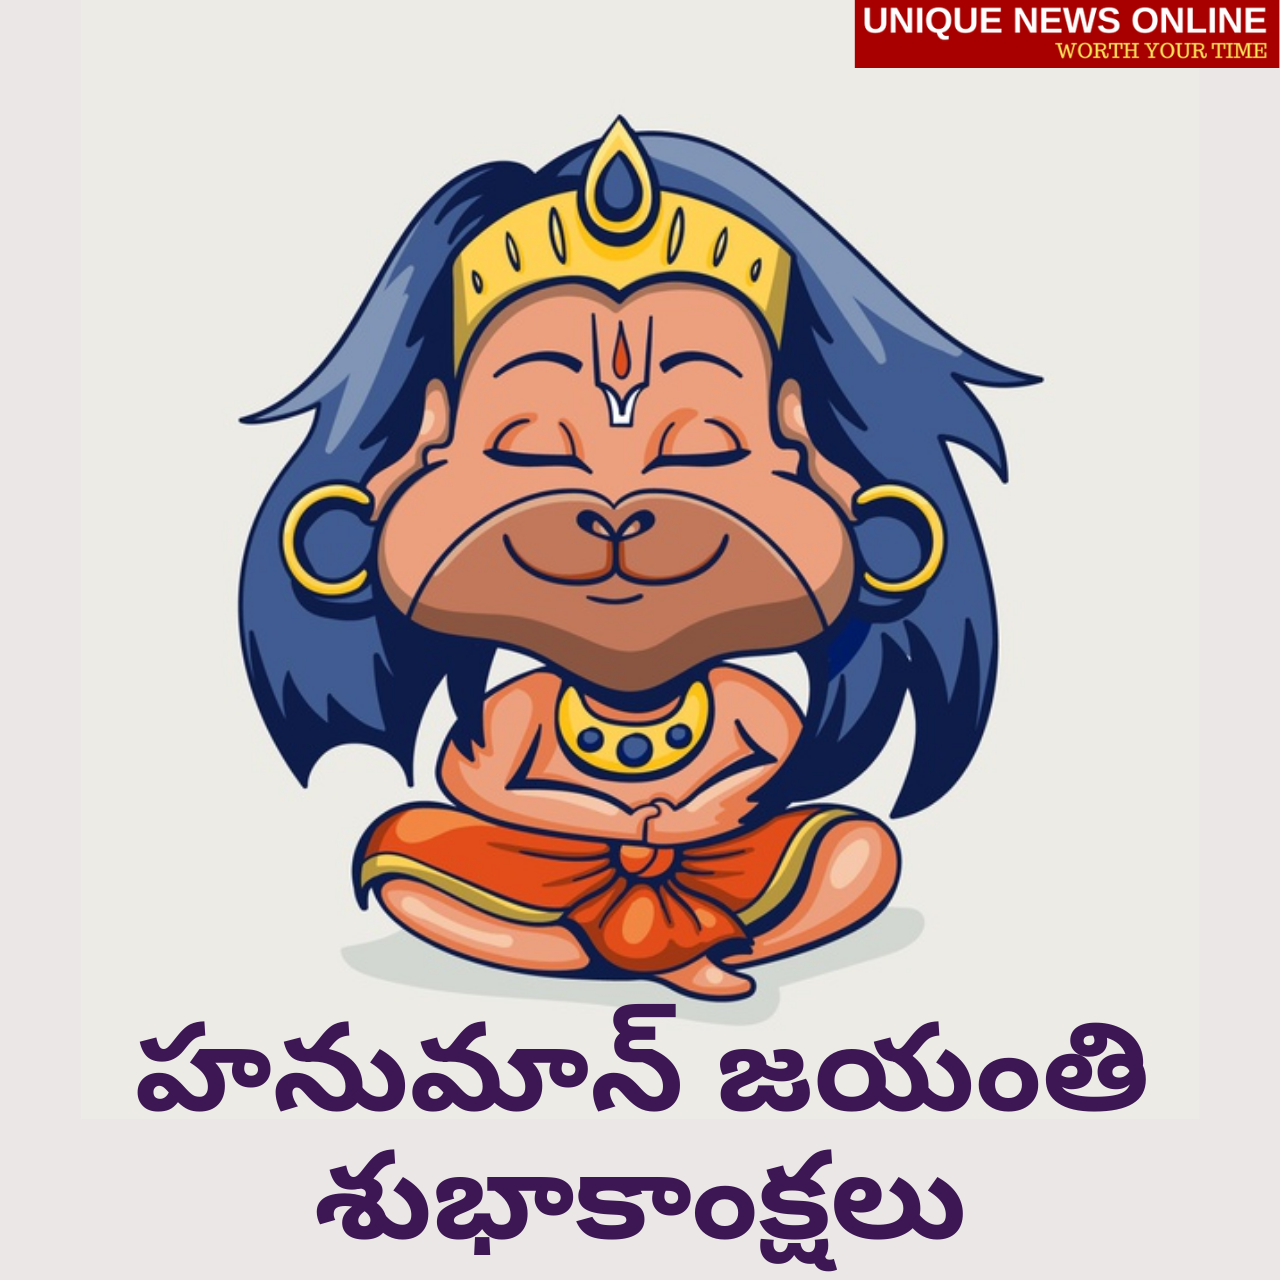 Happy Hanuman Jayanti 2021 wishes in Telugu, Greetings, Status, Images, Messages, and Quotes to Share on Hanuman Janmotsav